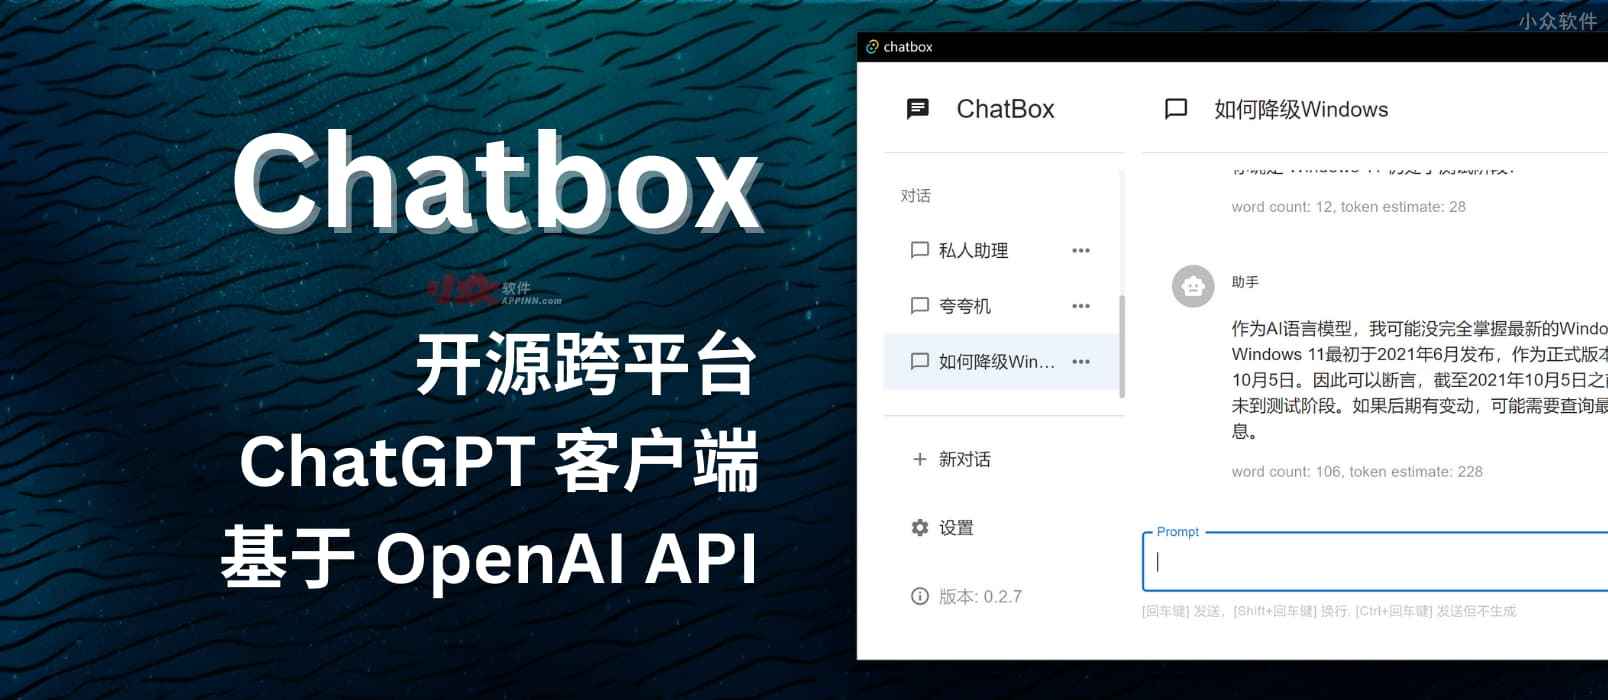 Chatbox – 开源跨平台 ChatGPT 客户端，基于 OpenAI API